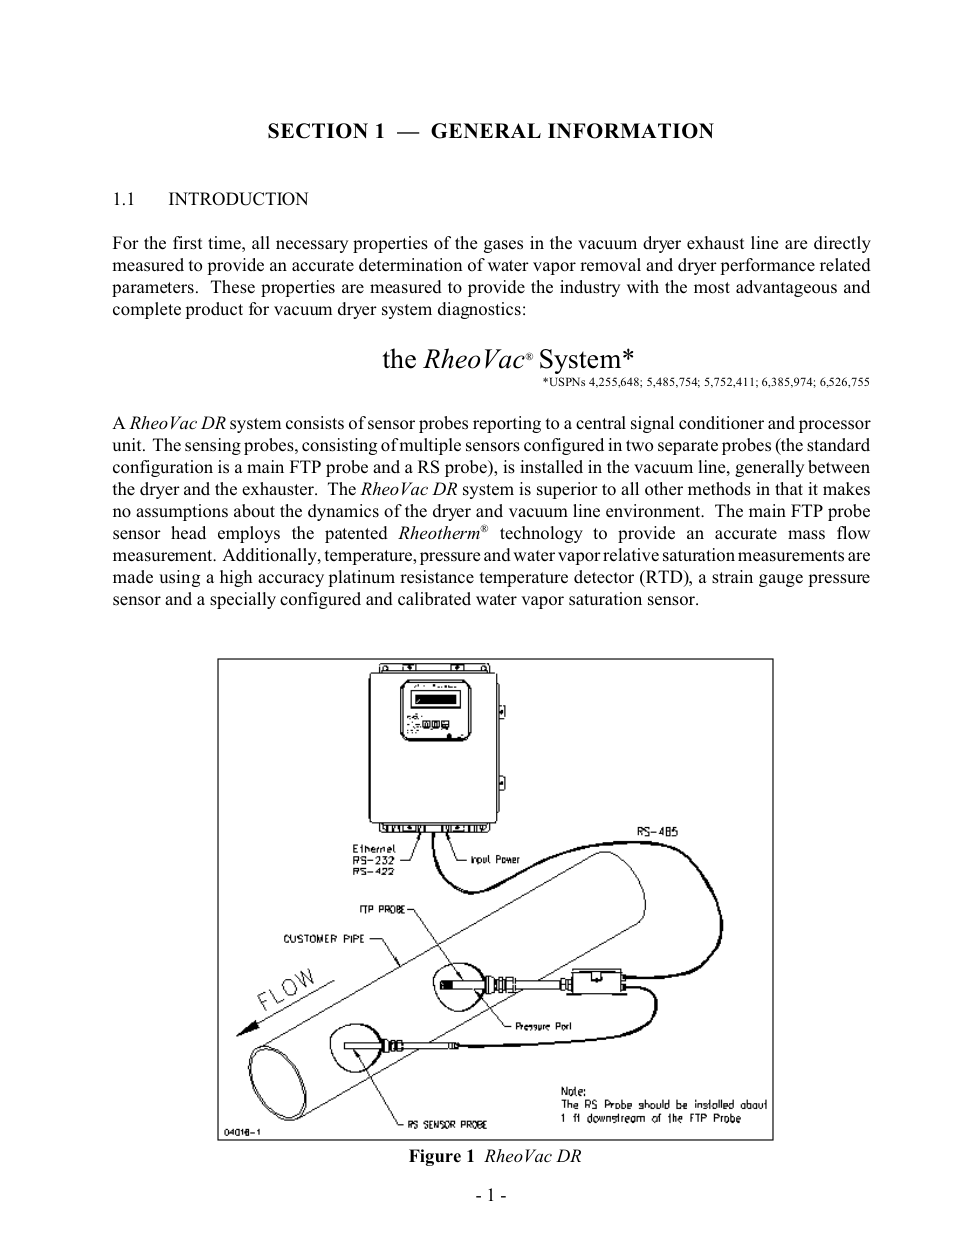 The rheovac, System | Intek RheoVac DR User Manual | Page 3 / 34